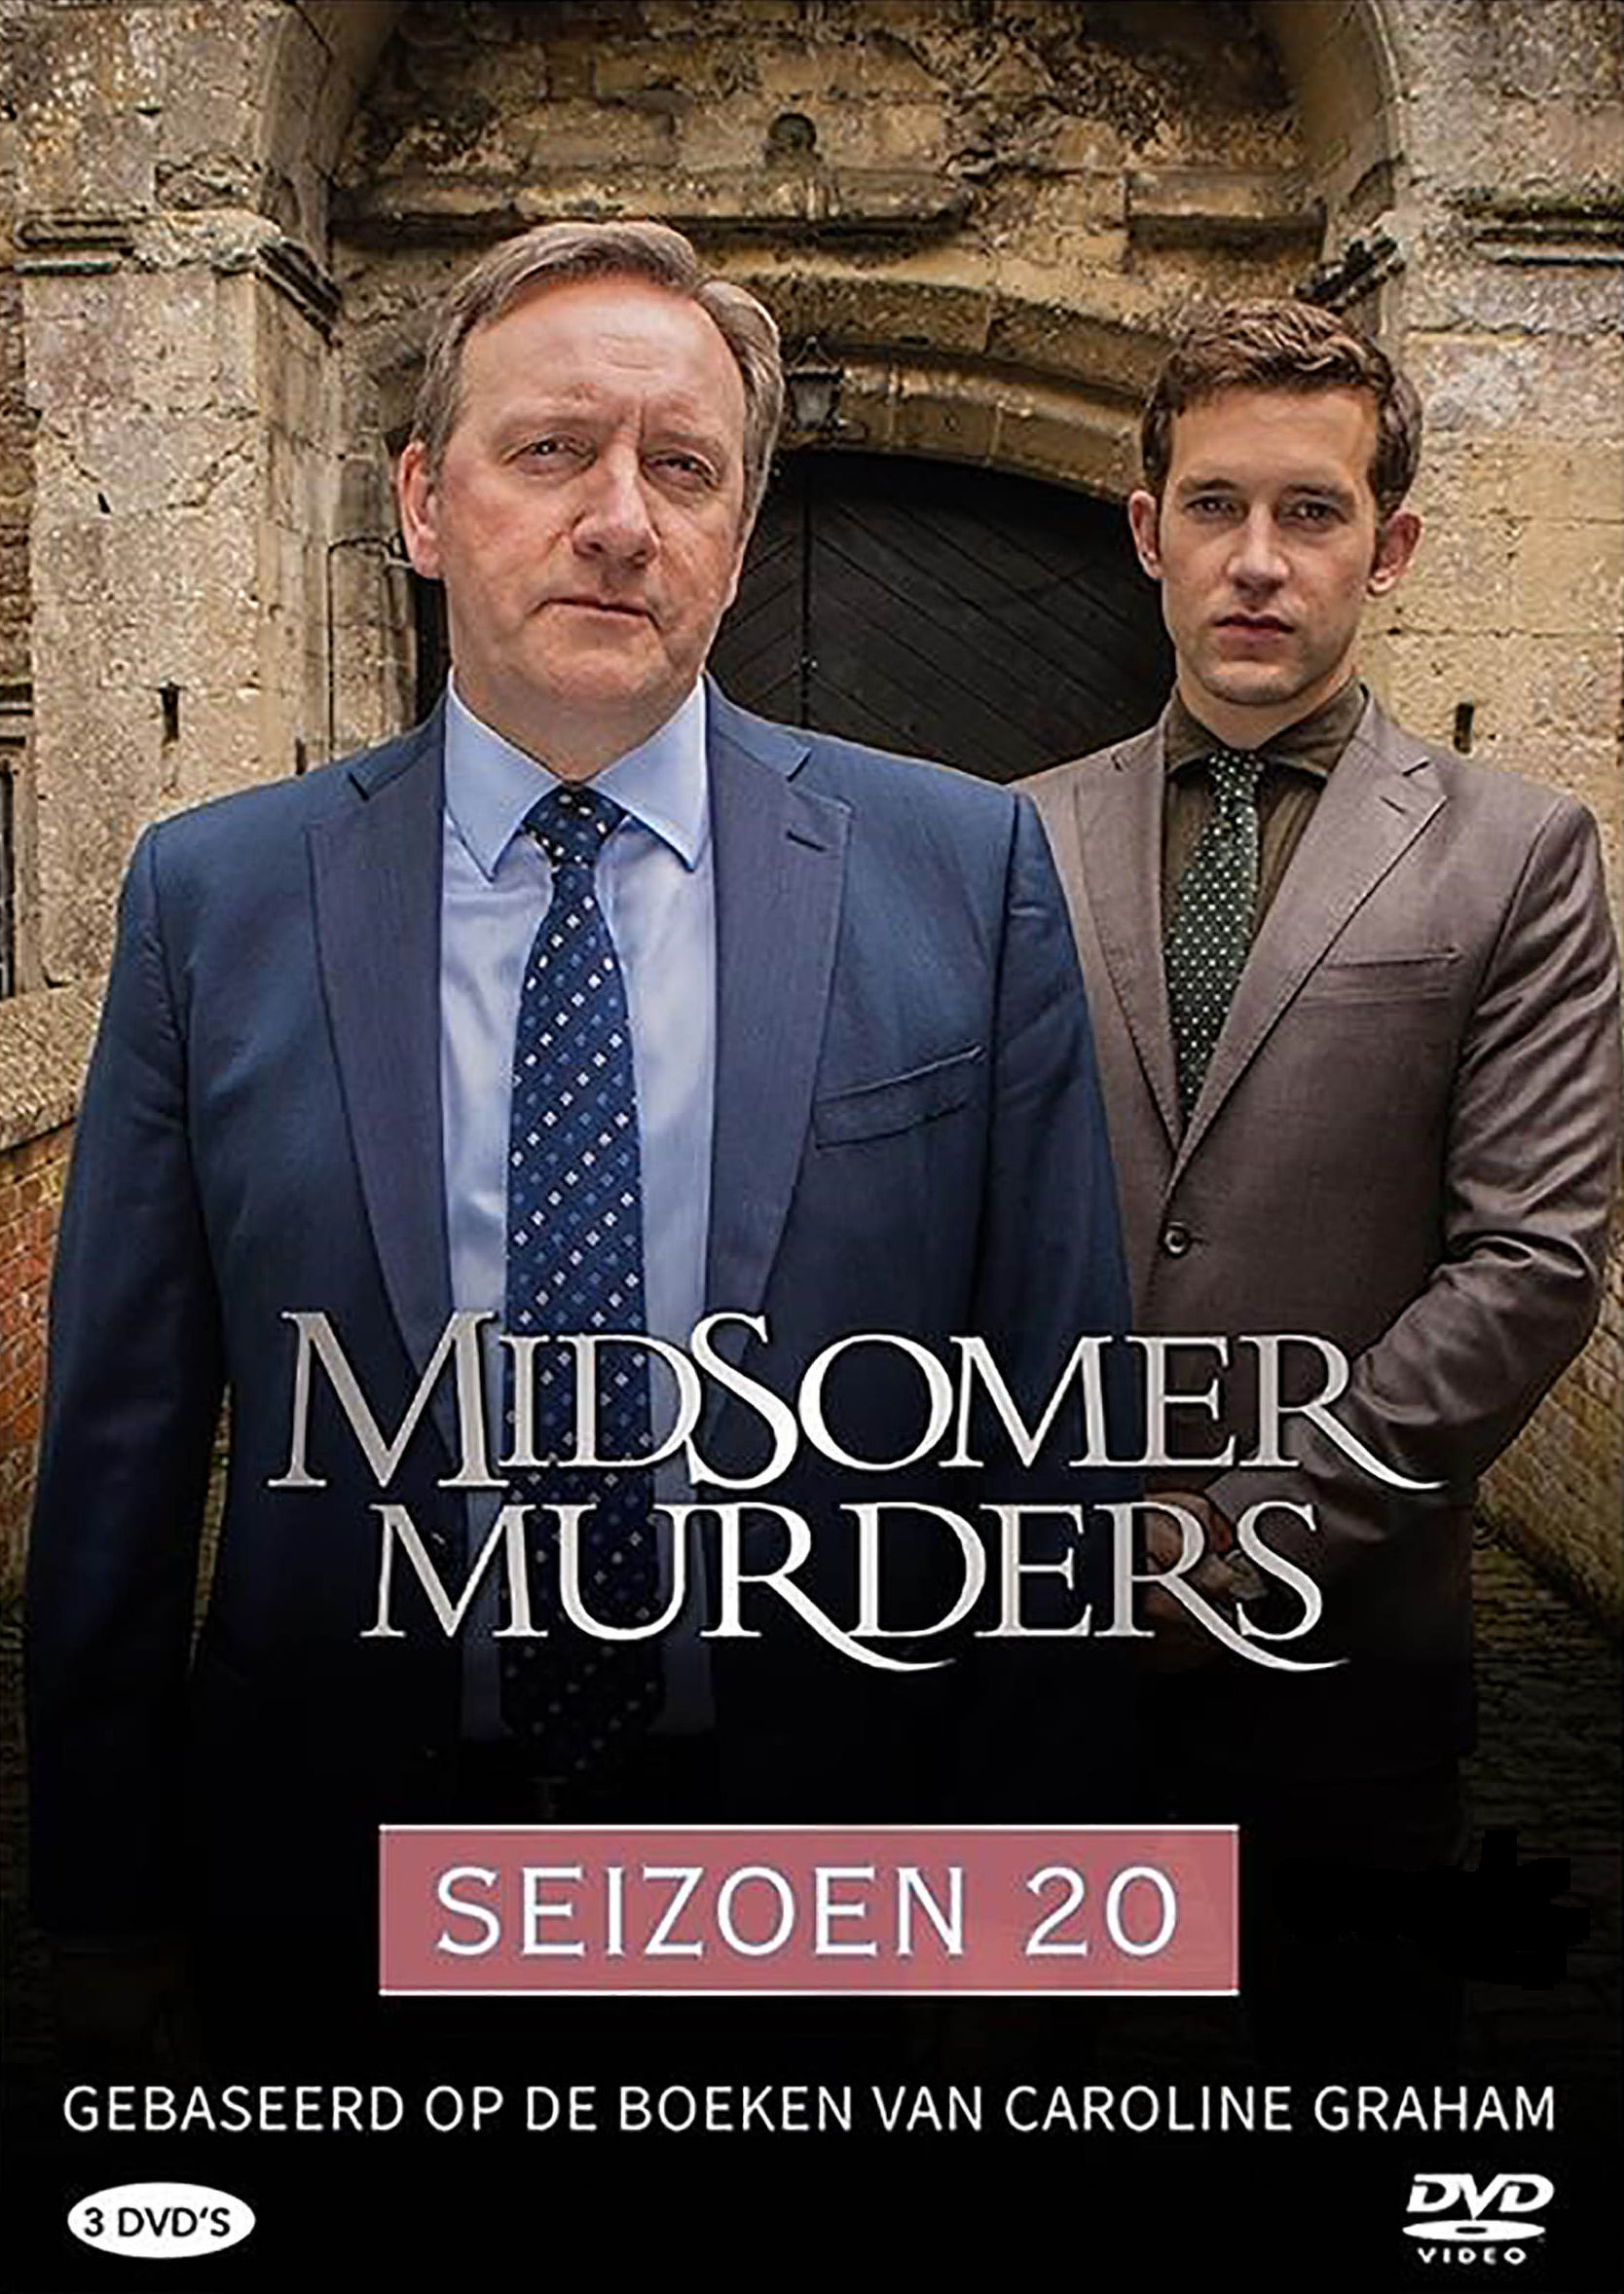 Midsomer Murders Seizoen 20 - DvD 1 - (Afl 1 - 2)